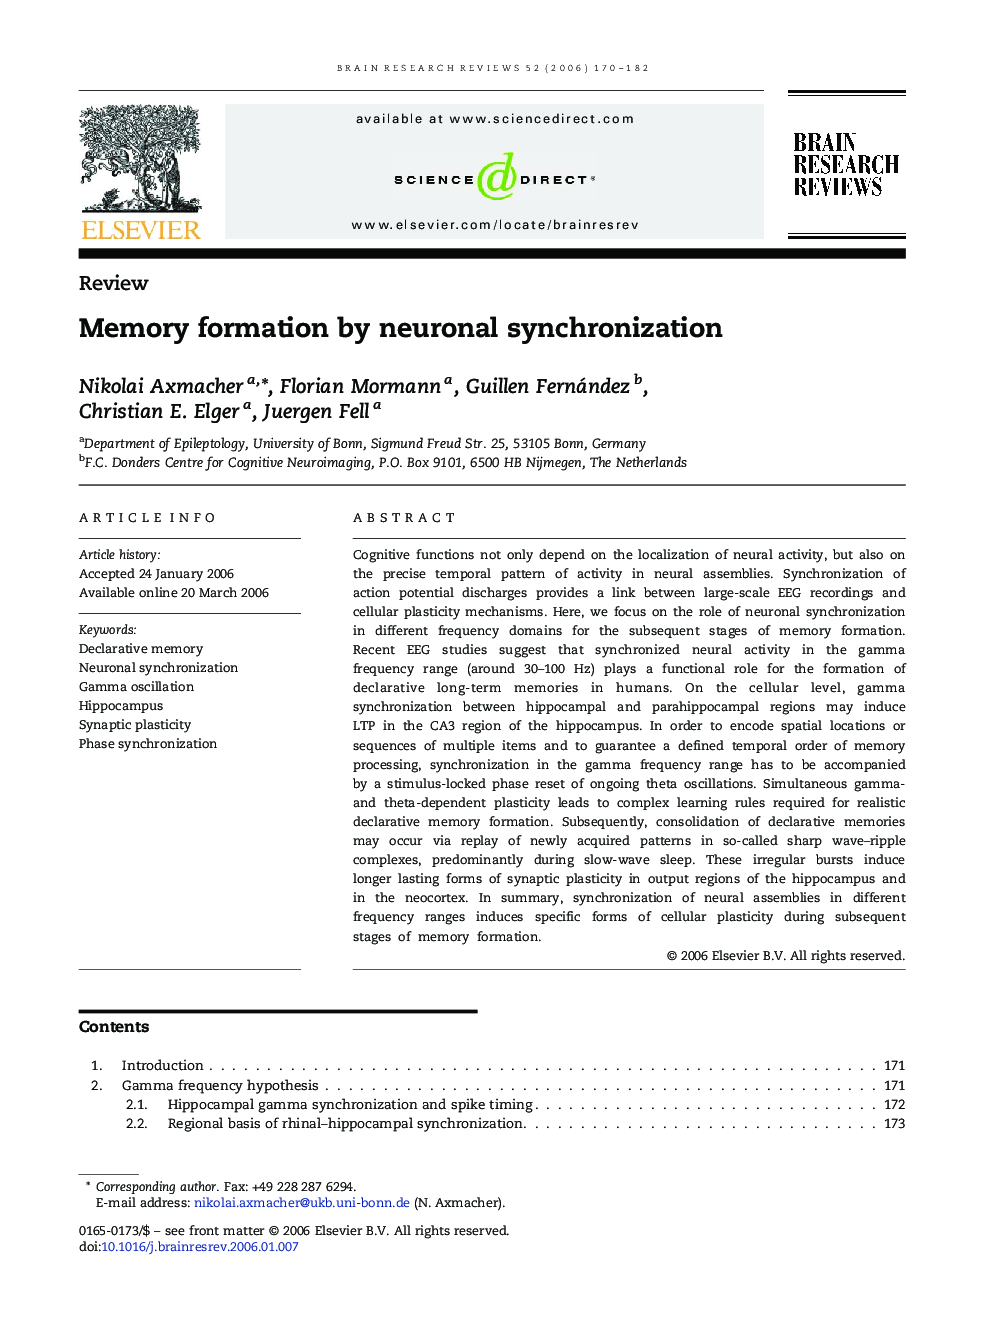 Memory formation by neuronal synchronization